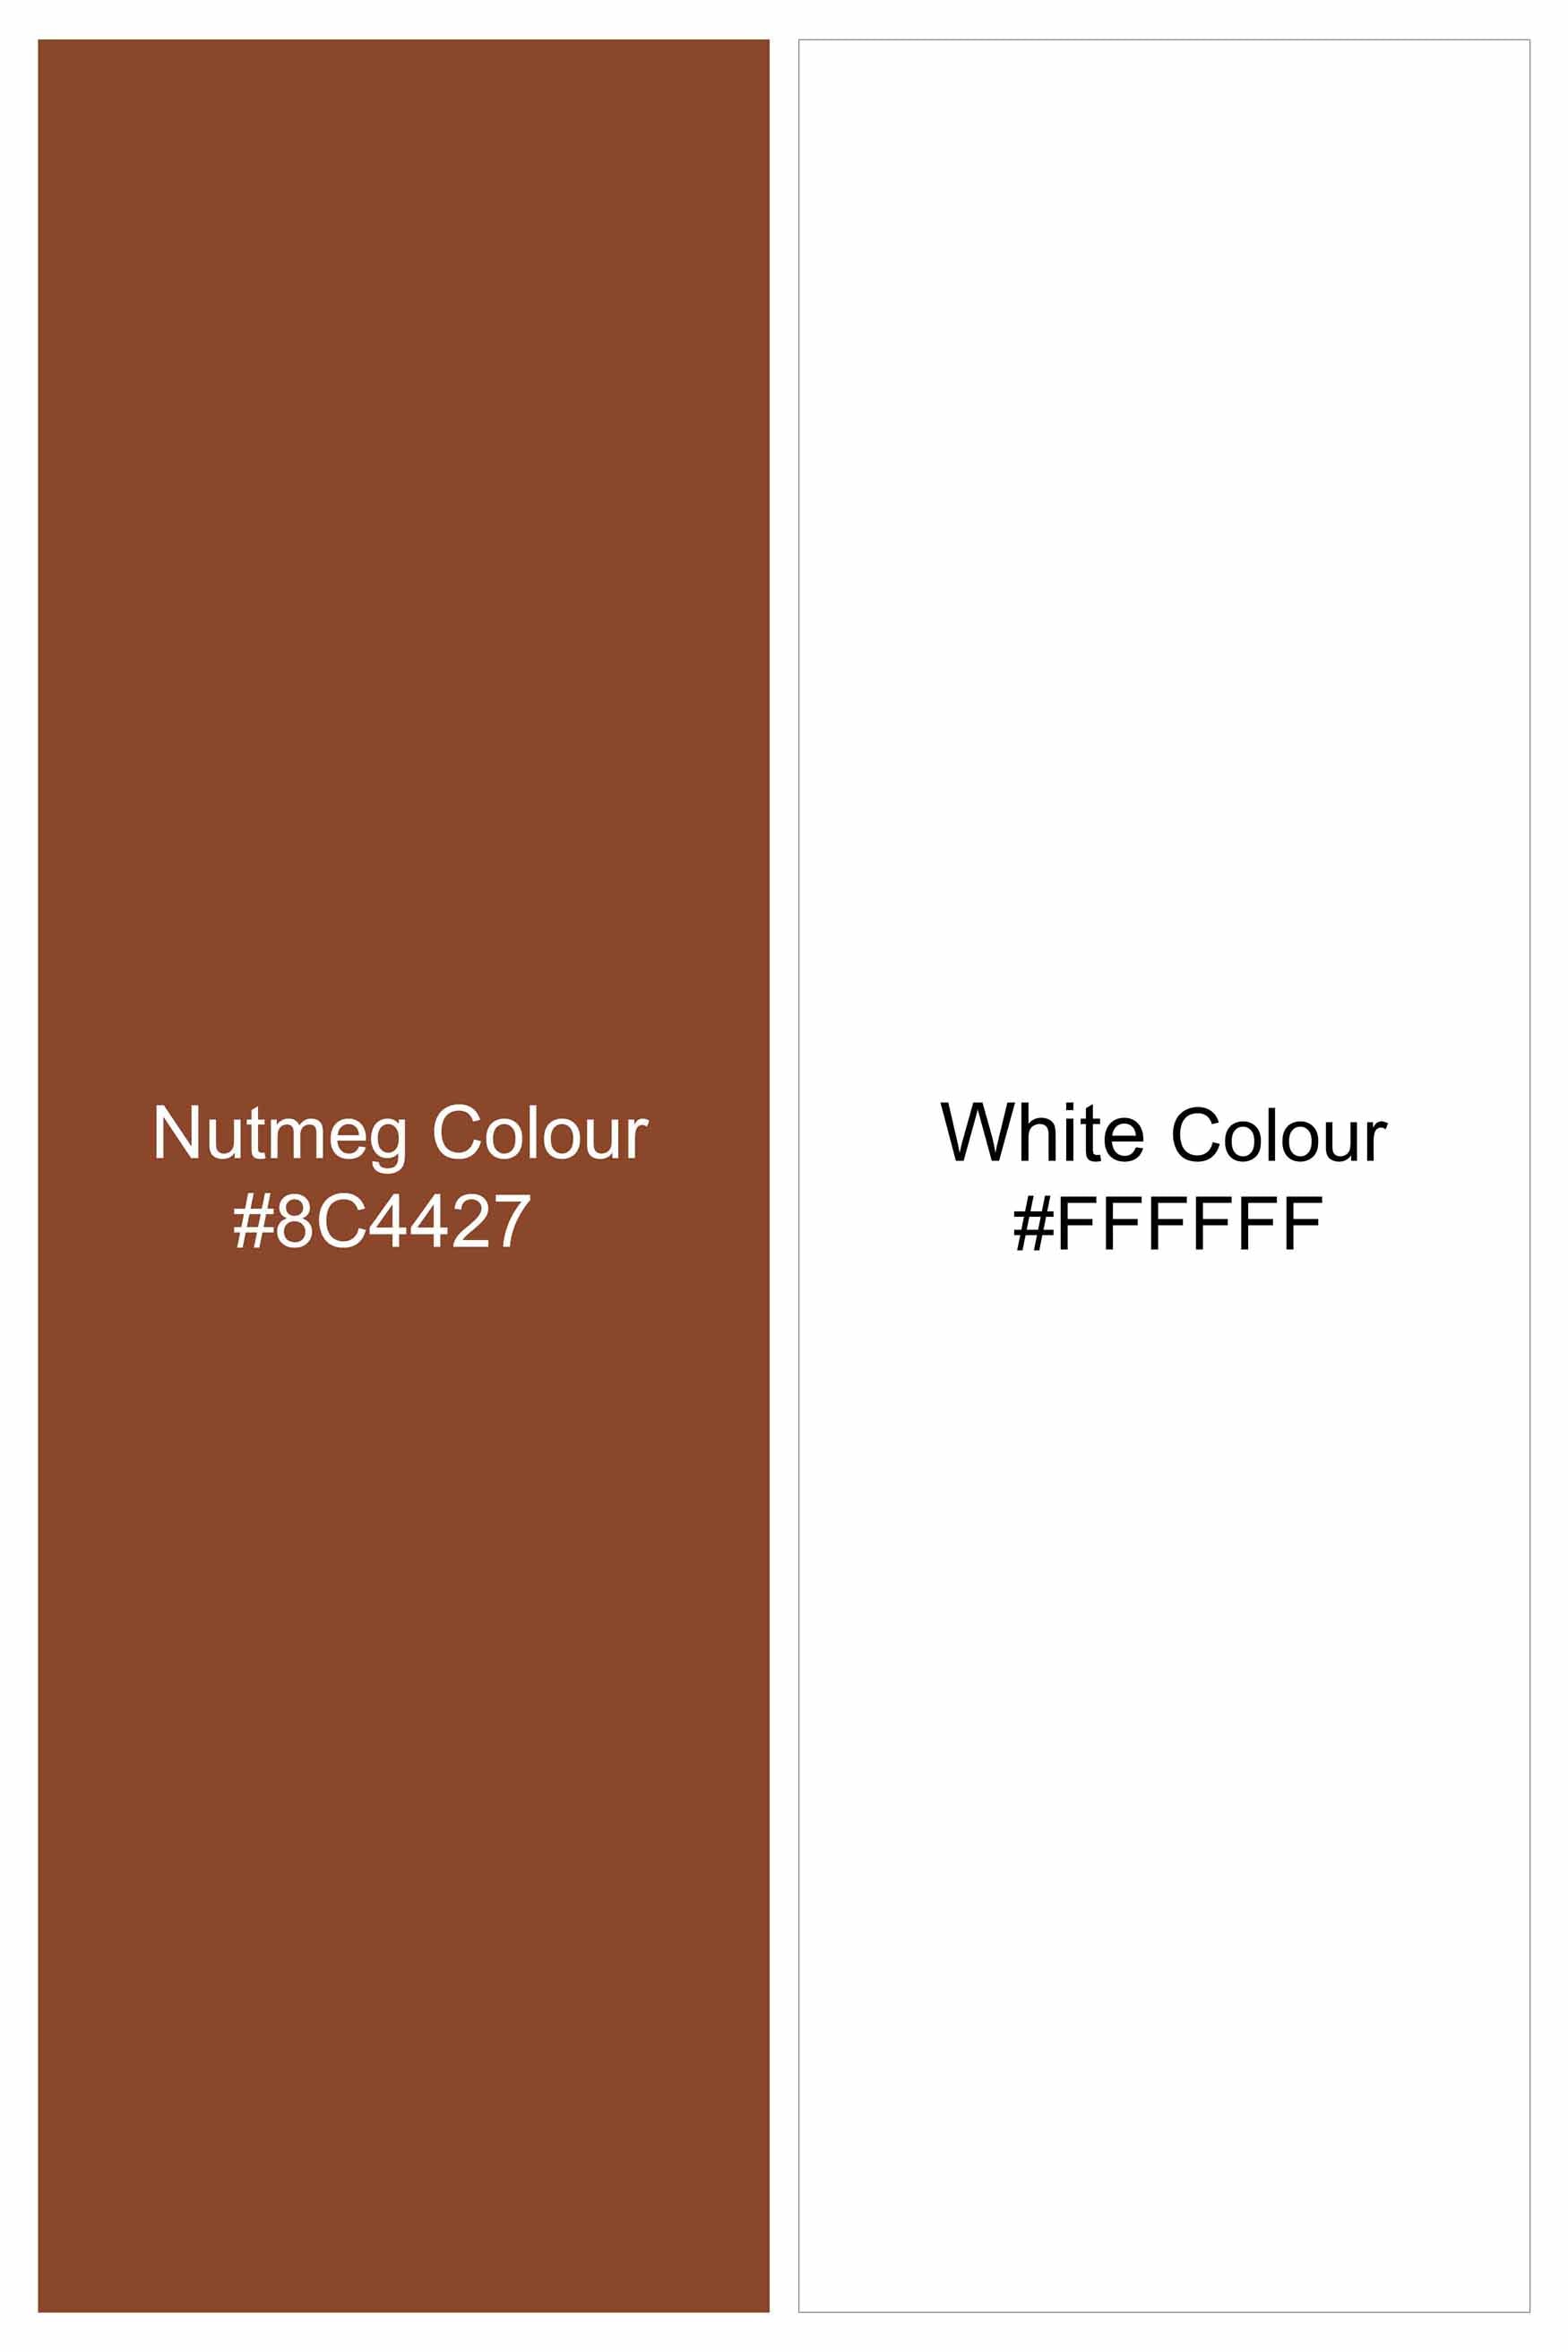 Nutmeg Brown and White Printed Super Soft Premium Cotton Shirt